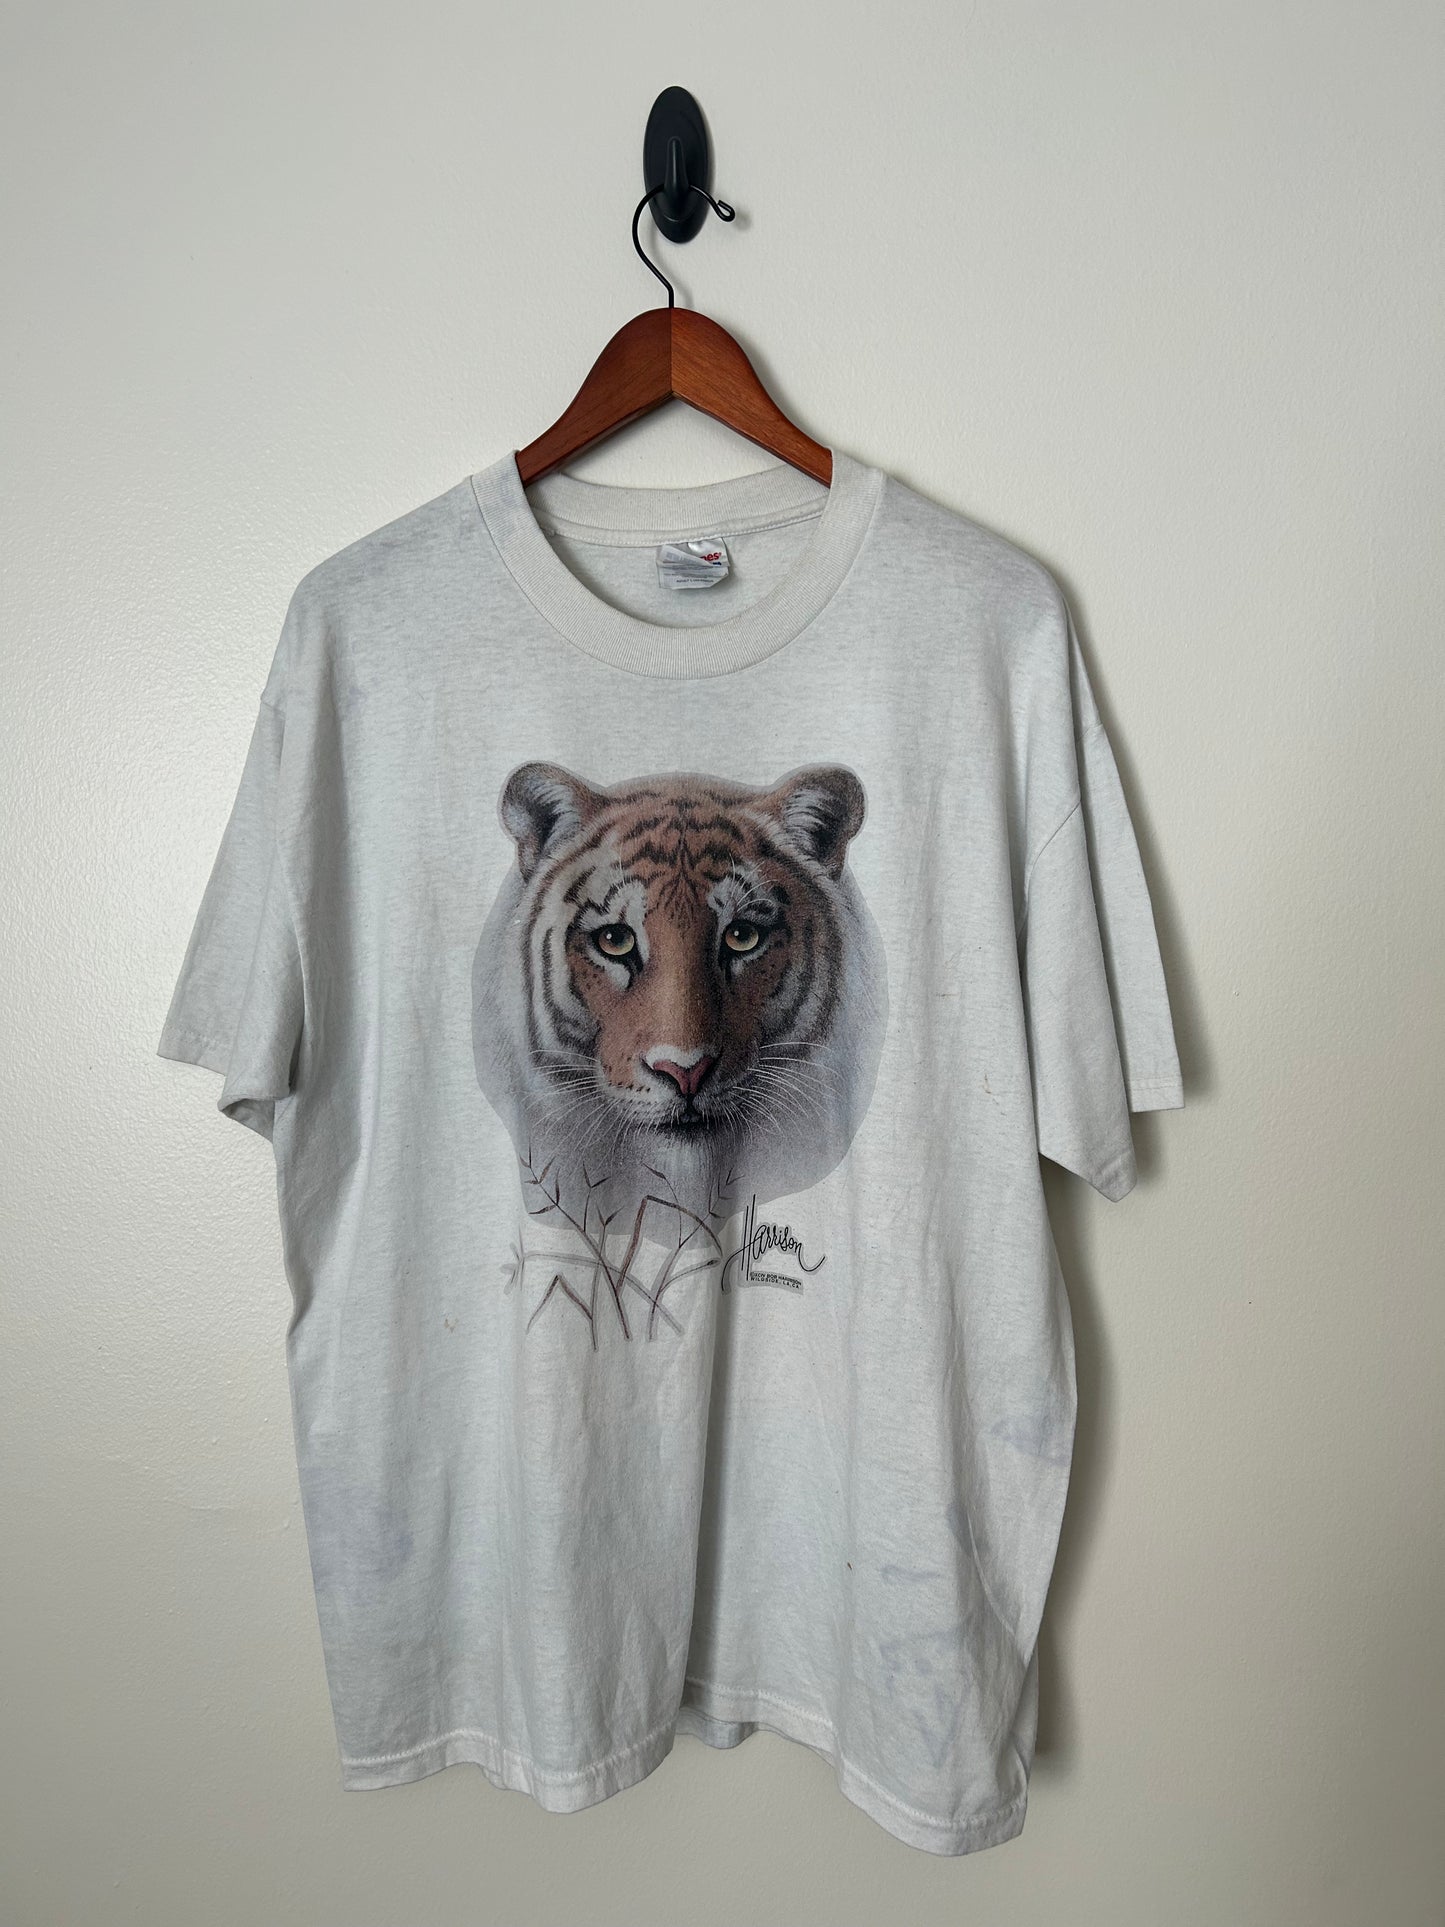 Tiger Graphic T-Shirt - L